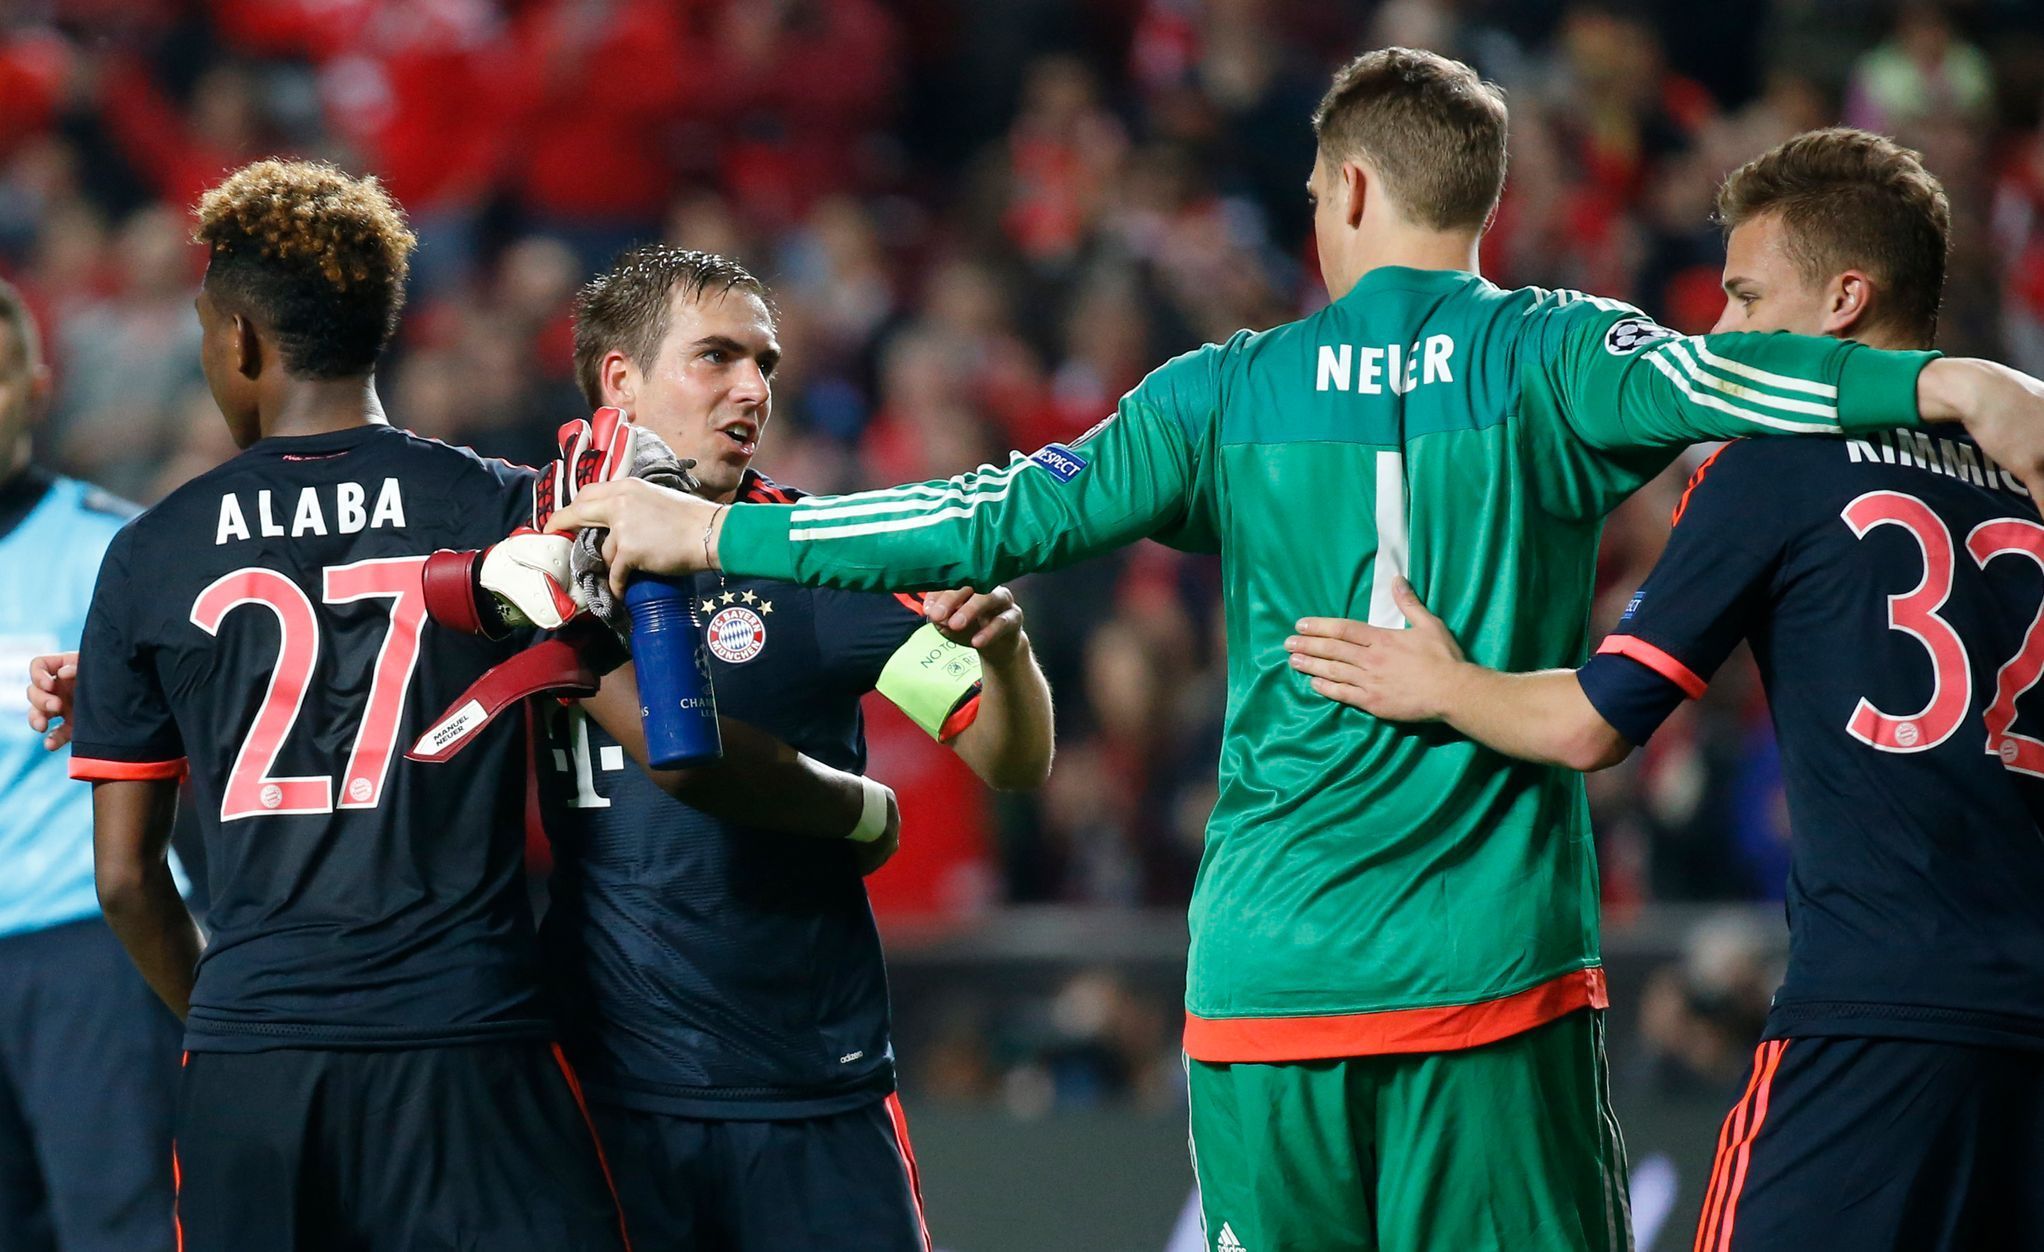 (L - R) Bayern Munich's David Alaba, Philipp Lahm, Manuel Neuer and Joshua Kimmich celebrate winning after the match